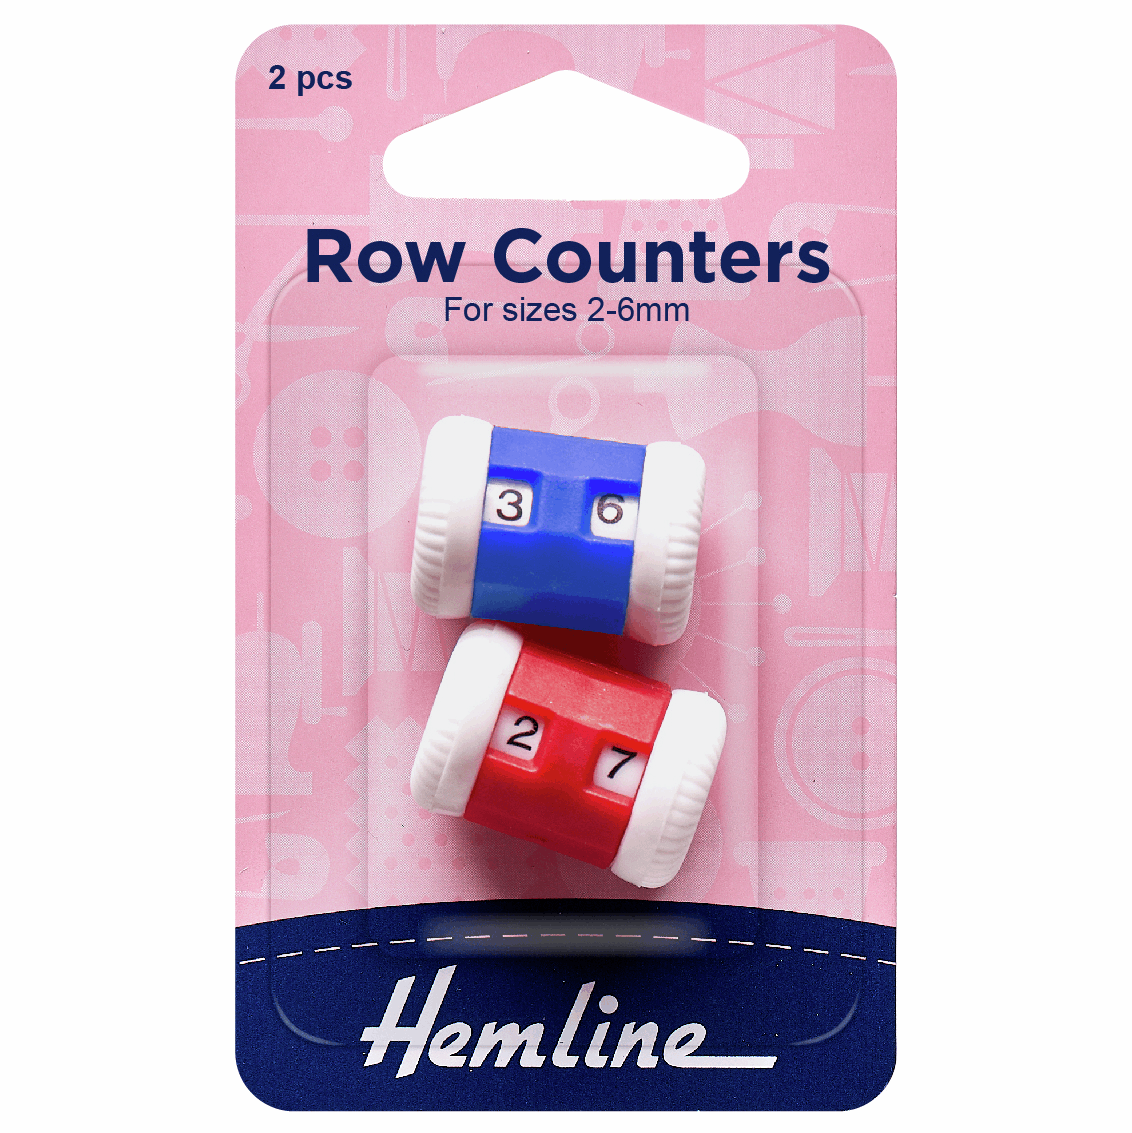 Hemline Knitting Row Counters - 2pc